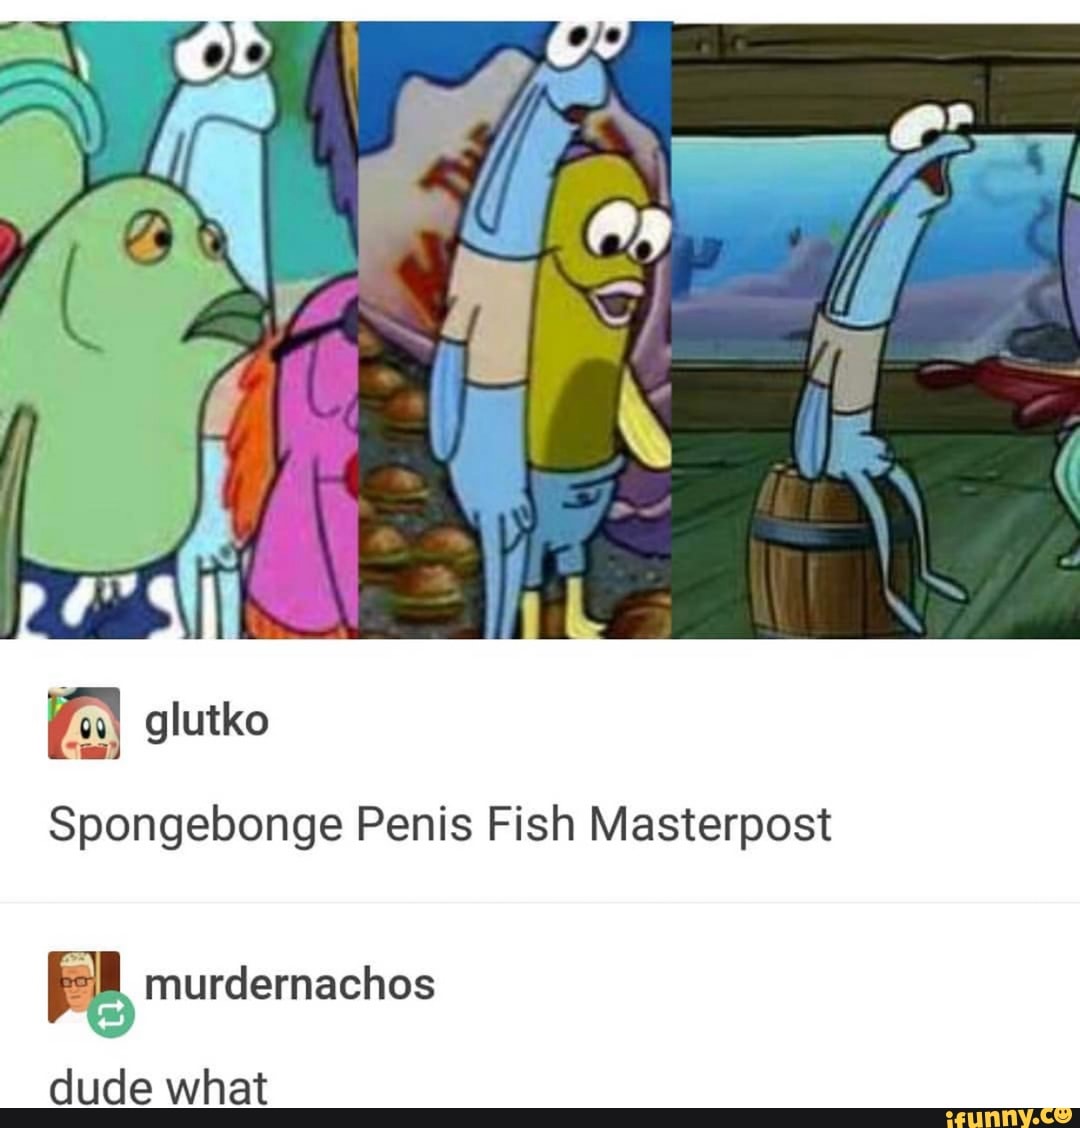 Spongebonge Penis Fish Masterpost Ea, murdernachos. iFunny. 